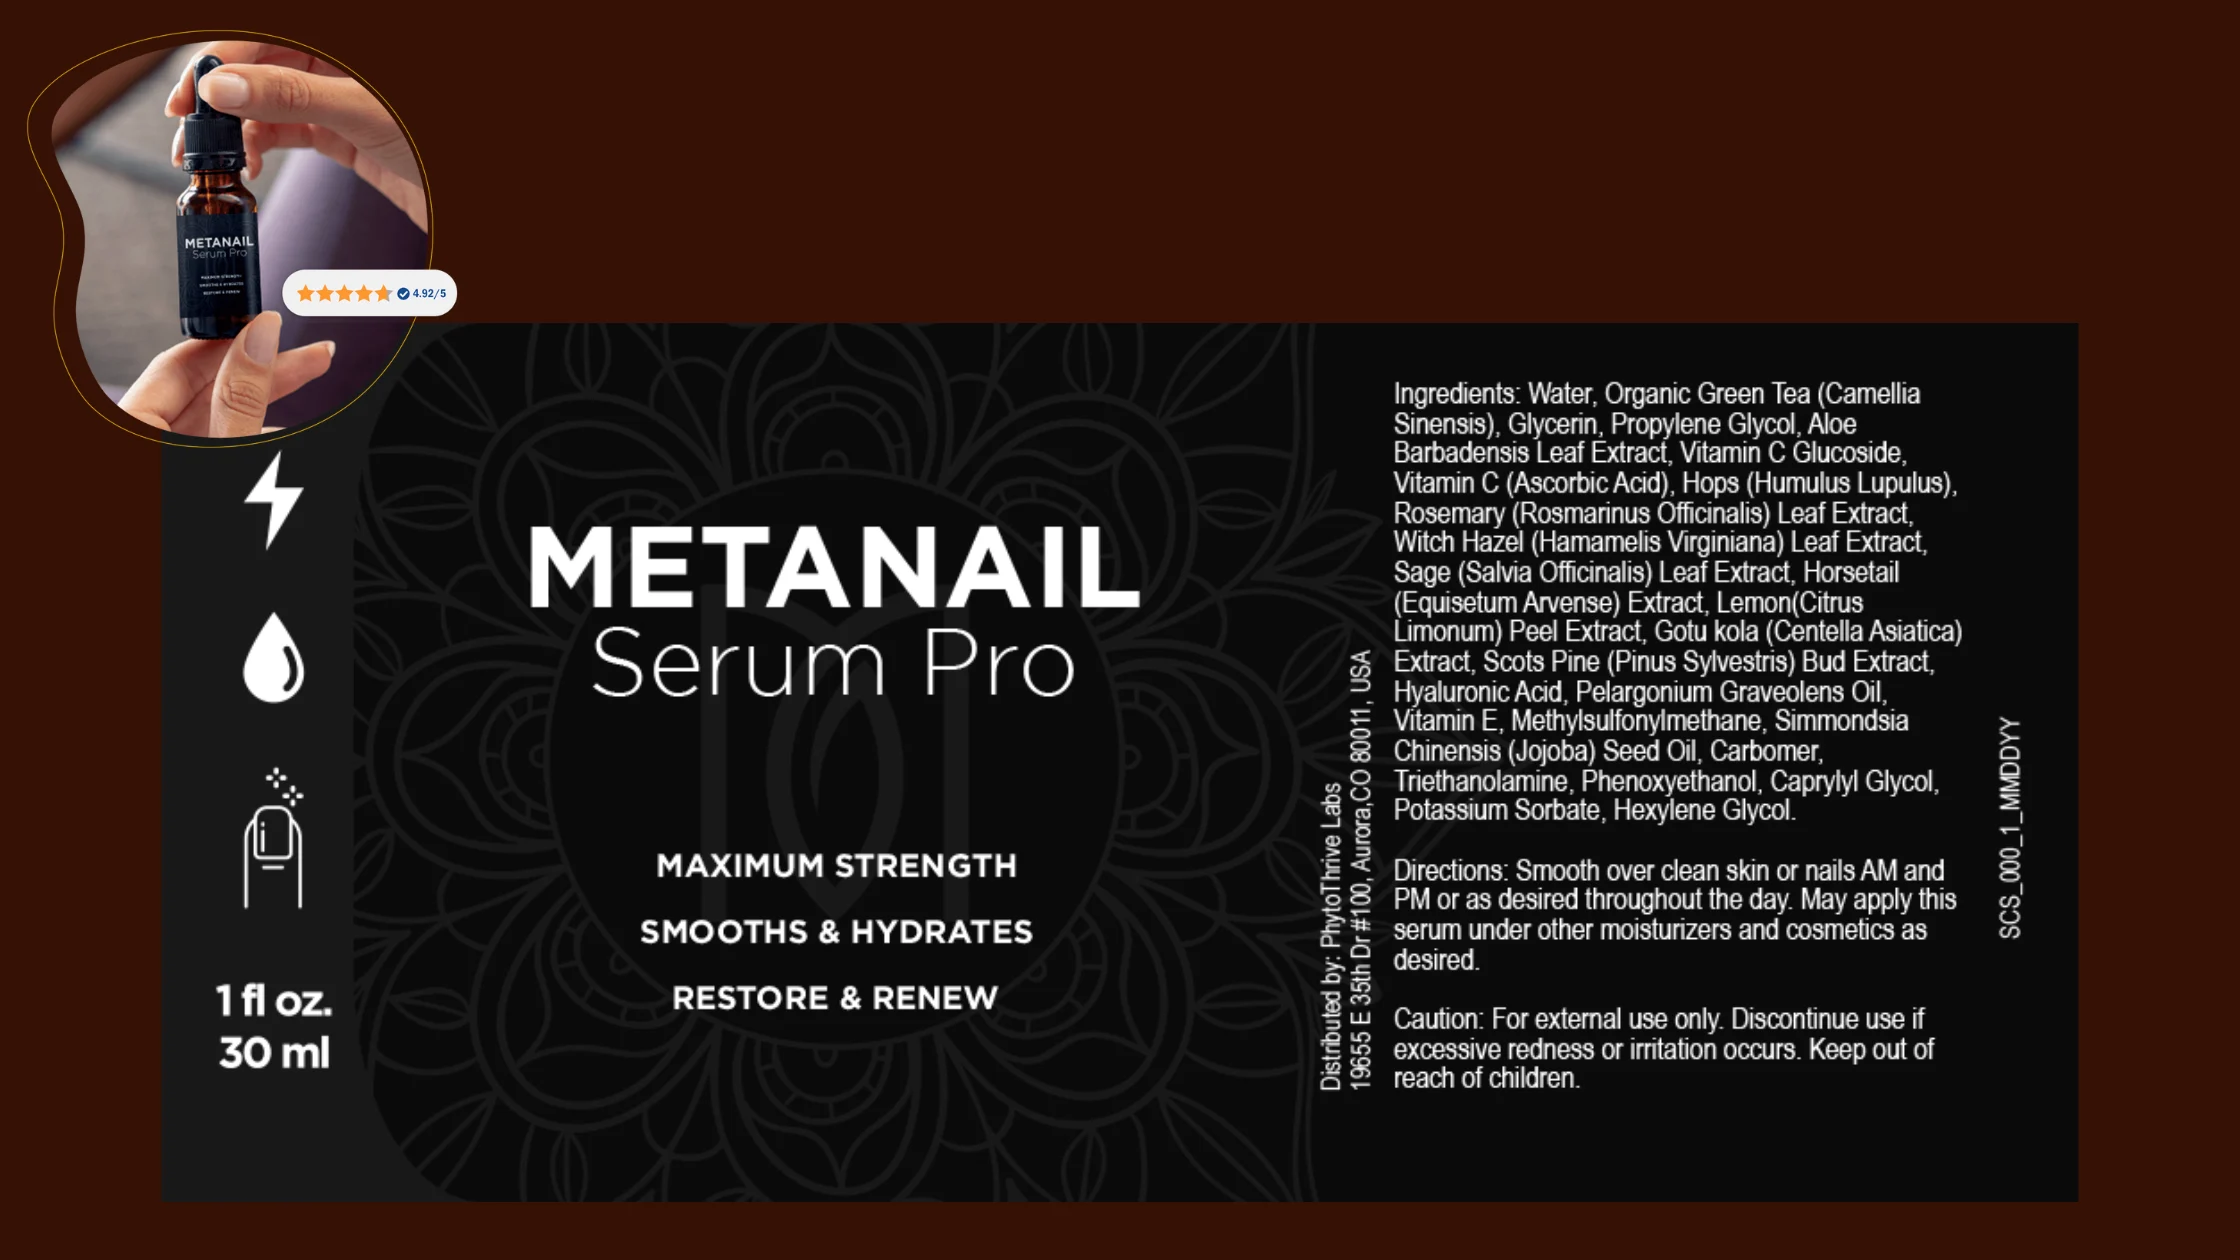 Metanail Serum Pro supplement facts